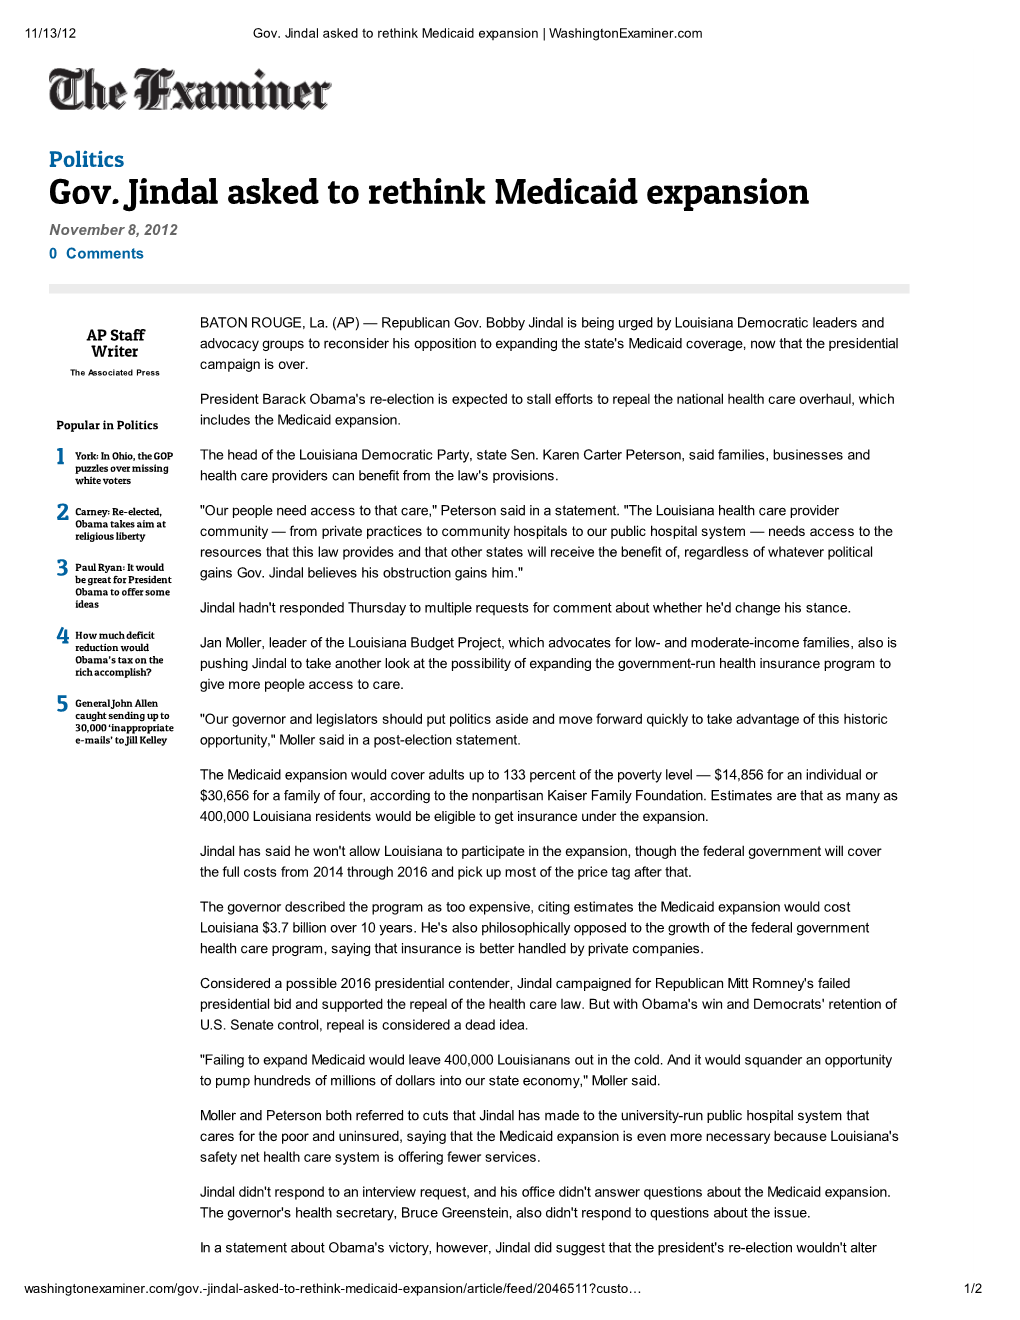 Gov. Jindal Asked to Rethink Medicaid Expansion | Washingtonexaminer.Com